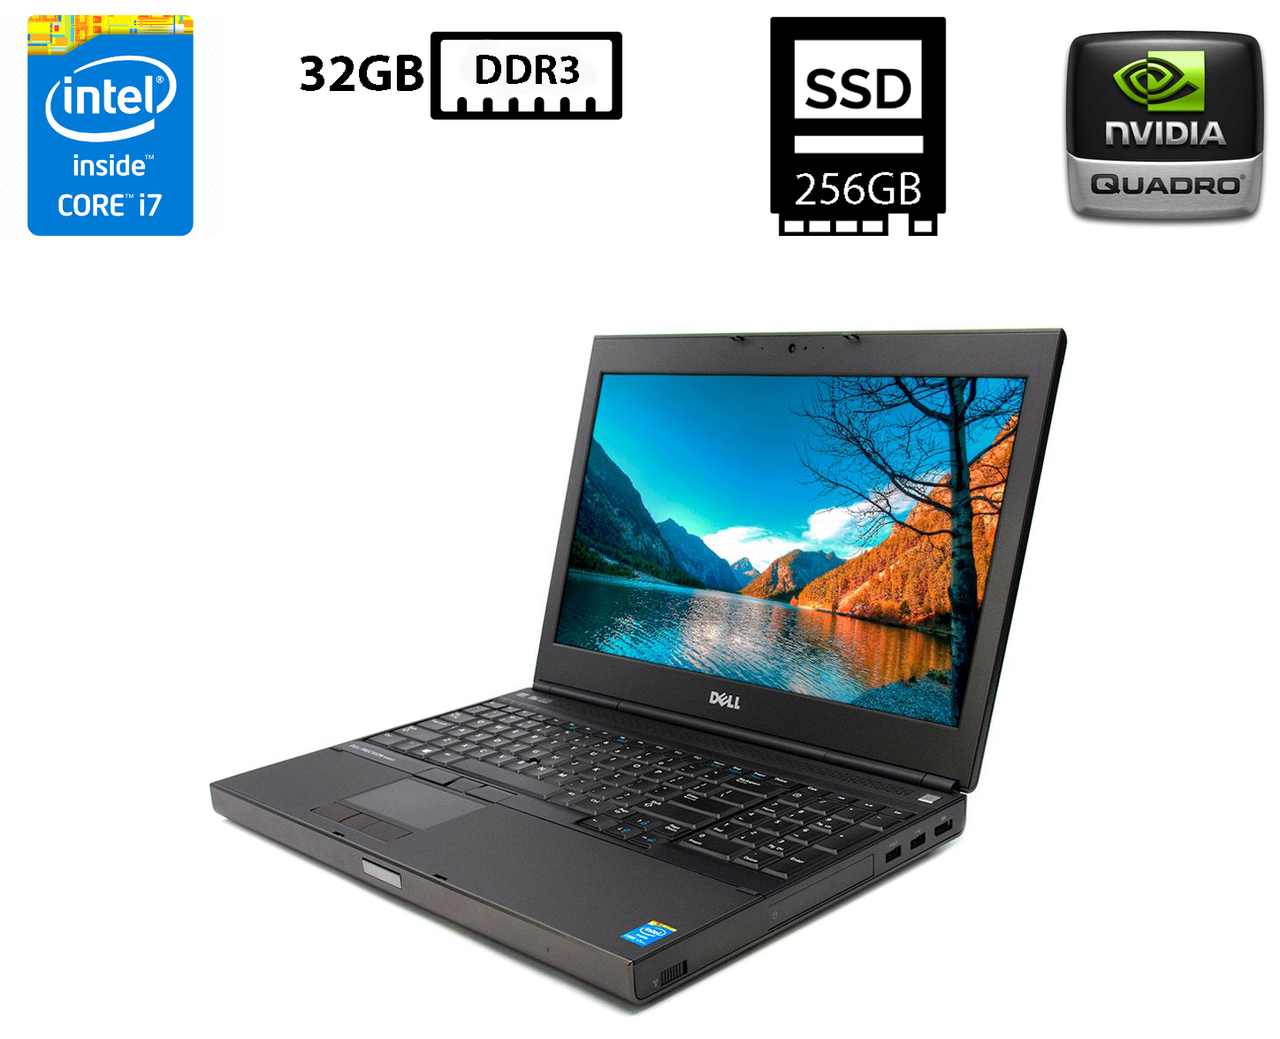 Ноутбук Dell Precision M4800/15.6”TN(1920x1080)/Intel Core i7-4800MQ 2.70GHz/32GB DDR3/SSD 256GB/NVIDIA Quadro K1100M (2GB), фото 1